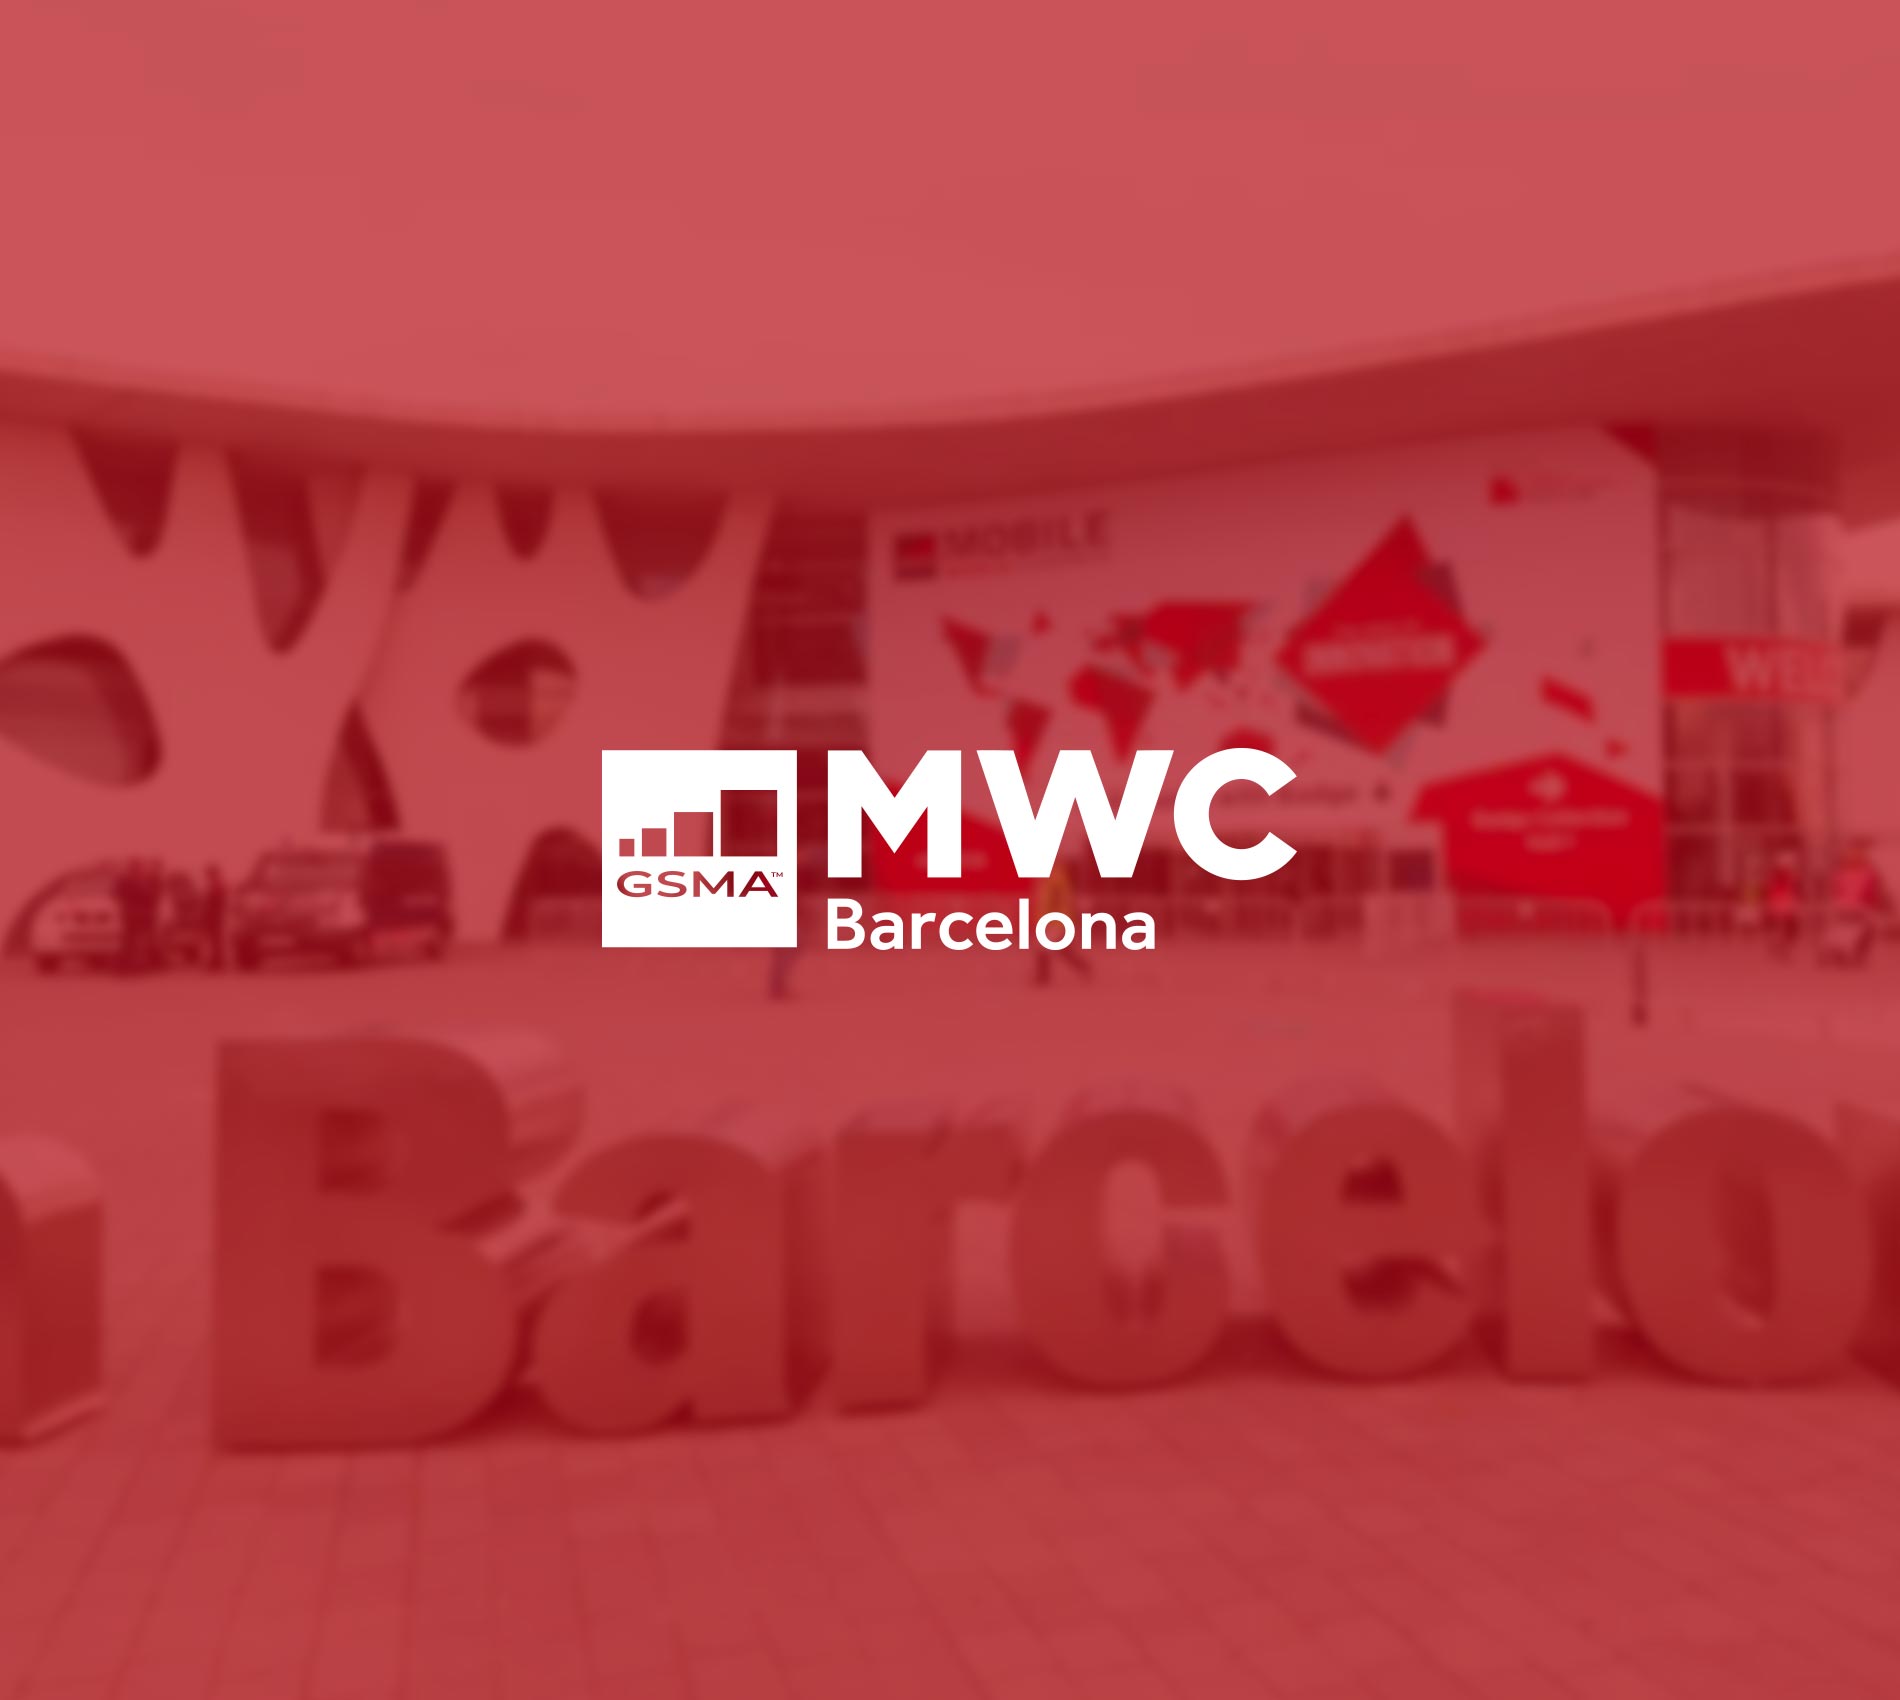 Mobile World Congress 2015, Barcelona